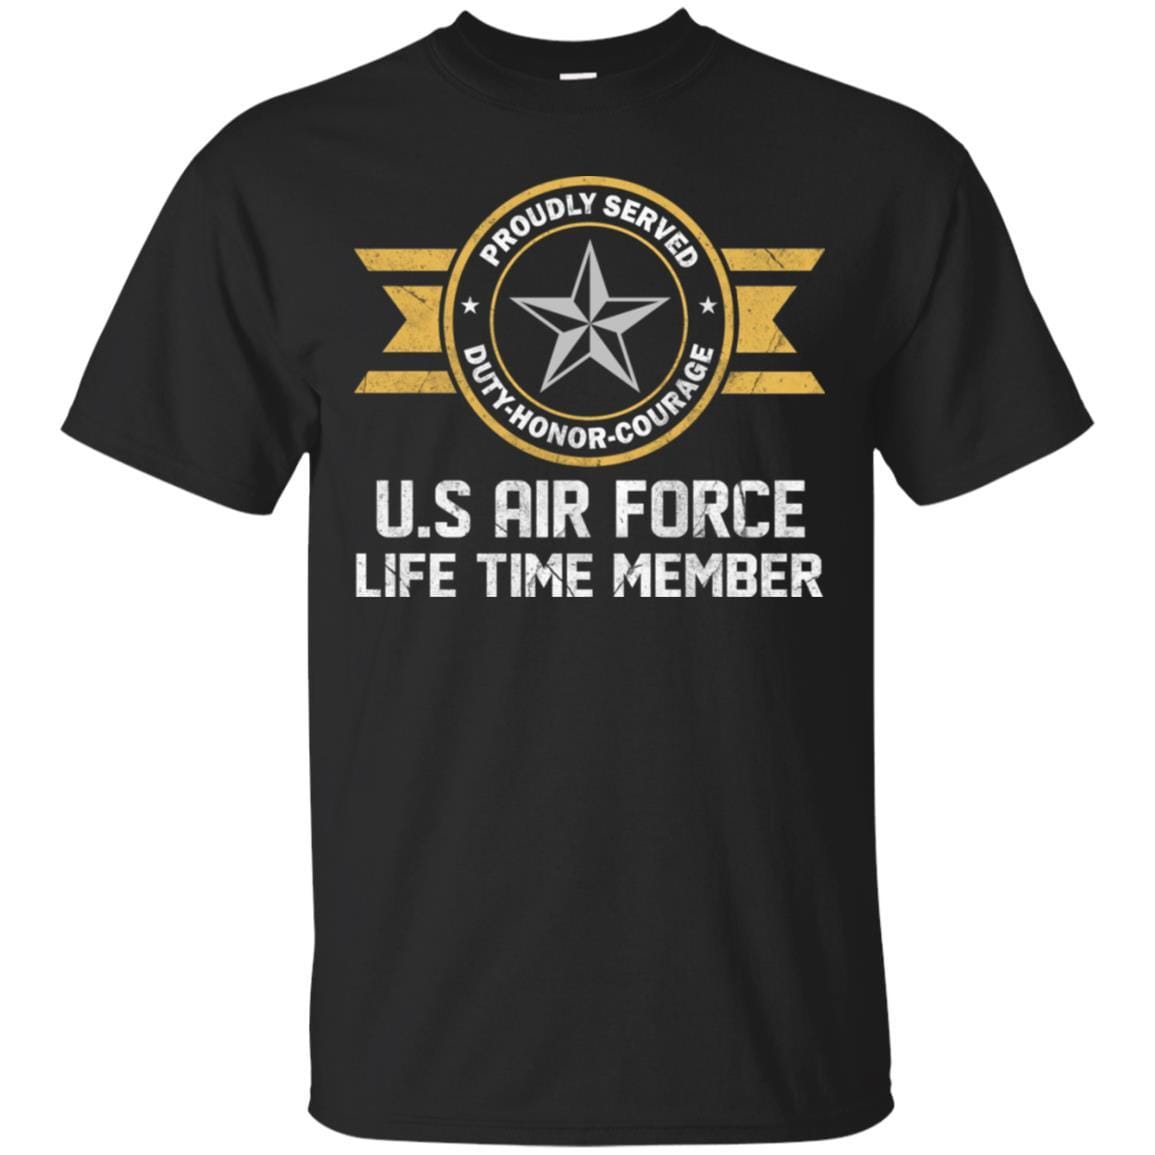 Life time member-US Air Force O-7 Brigadier General Brig O7 General Officer Ranks Men T Shirt On Front